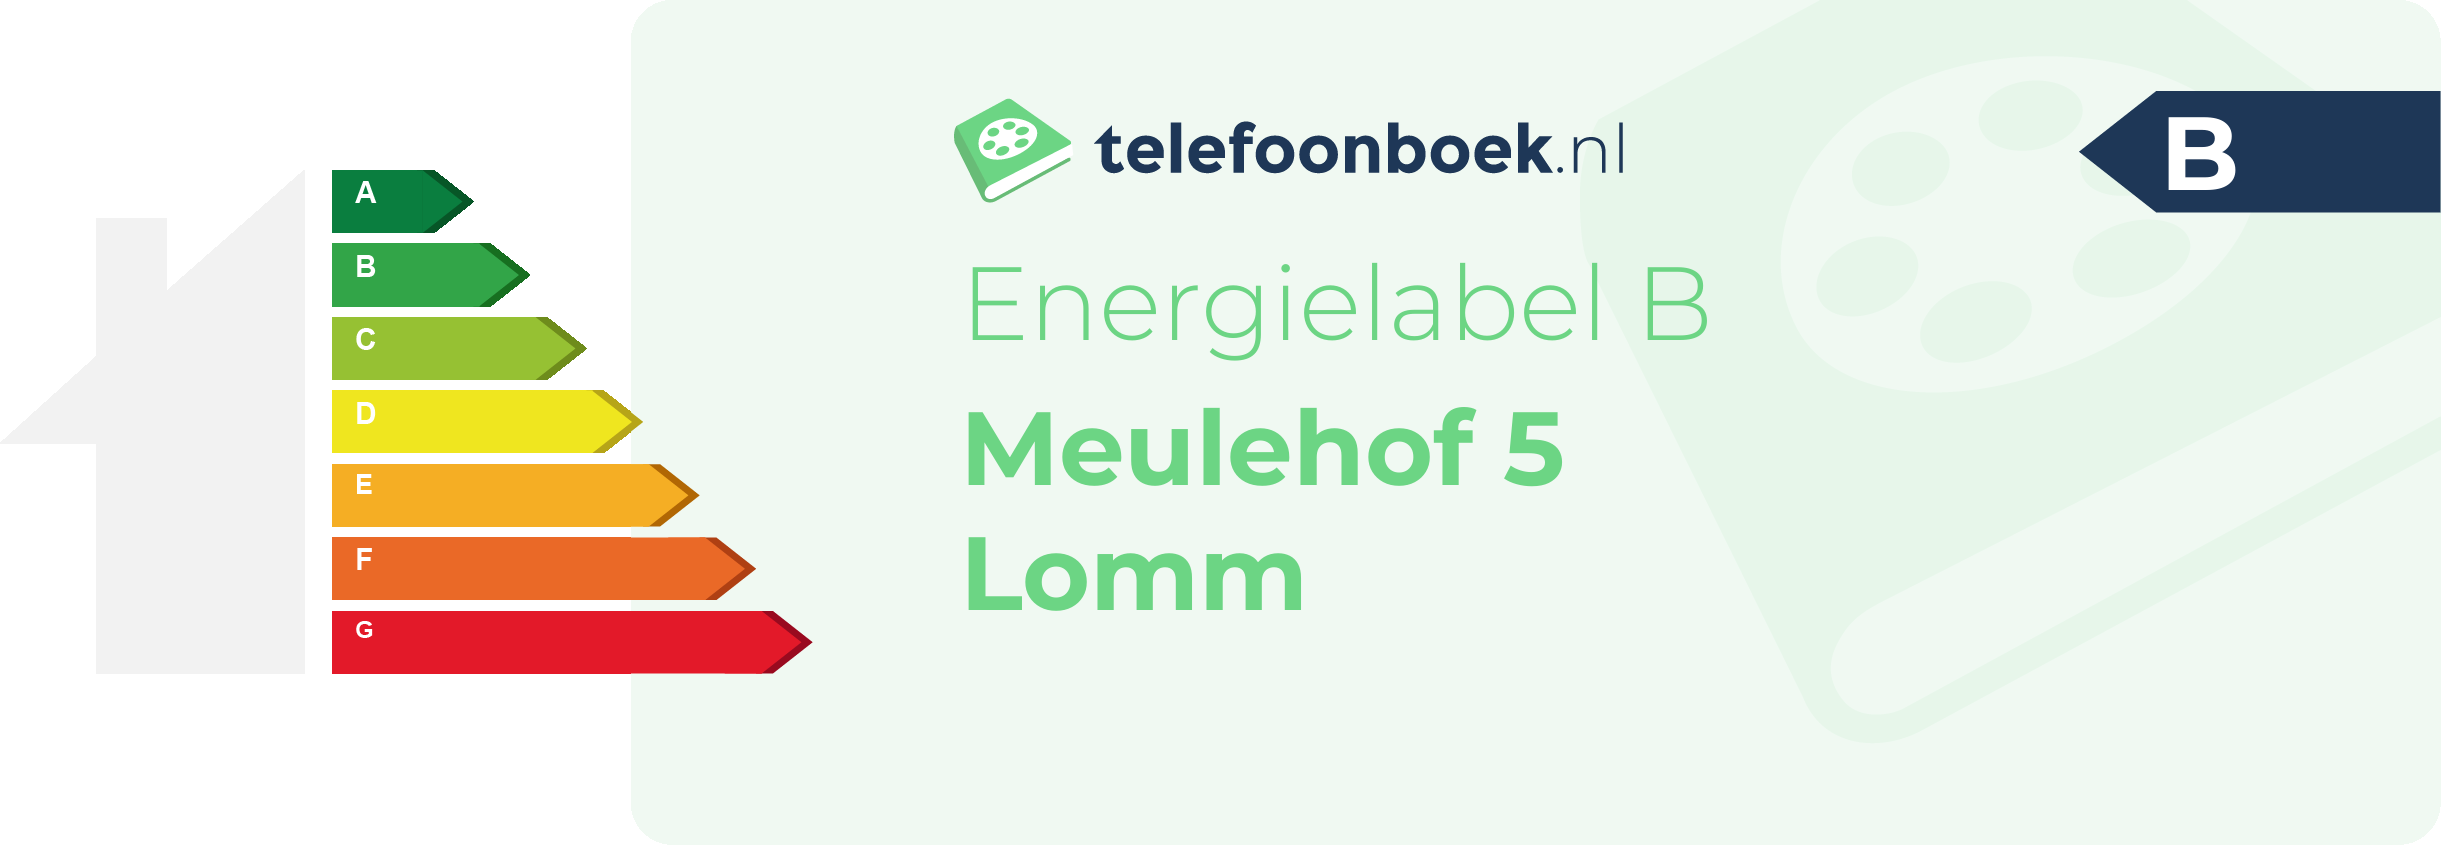 Energielabel Meulehof 5 Lomm